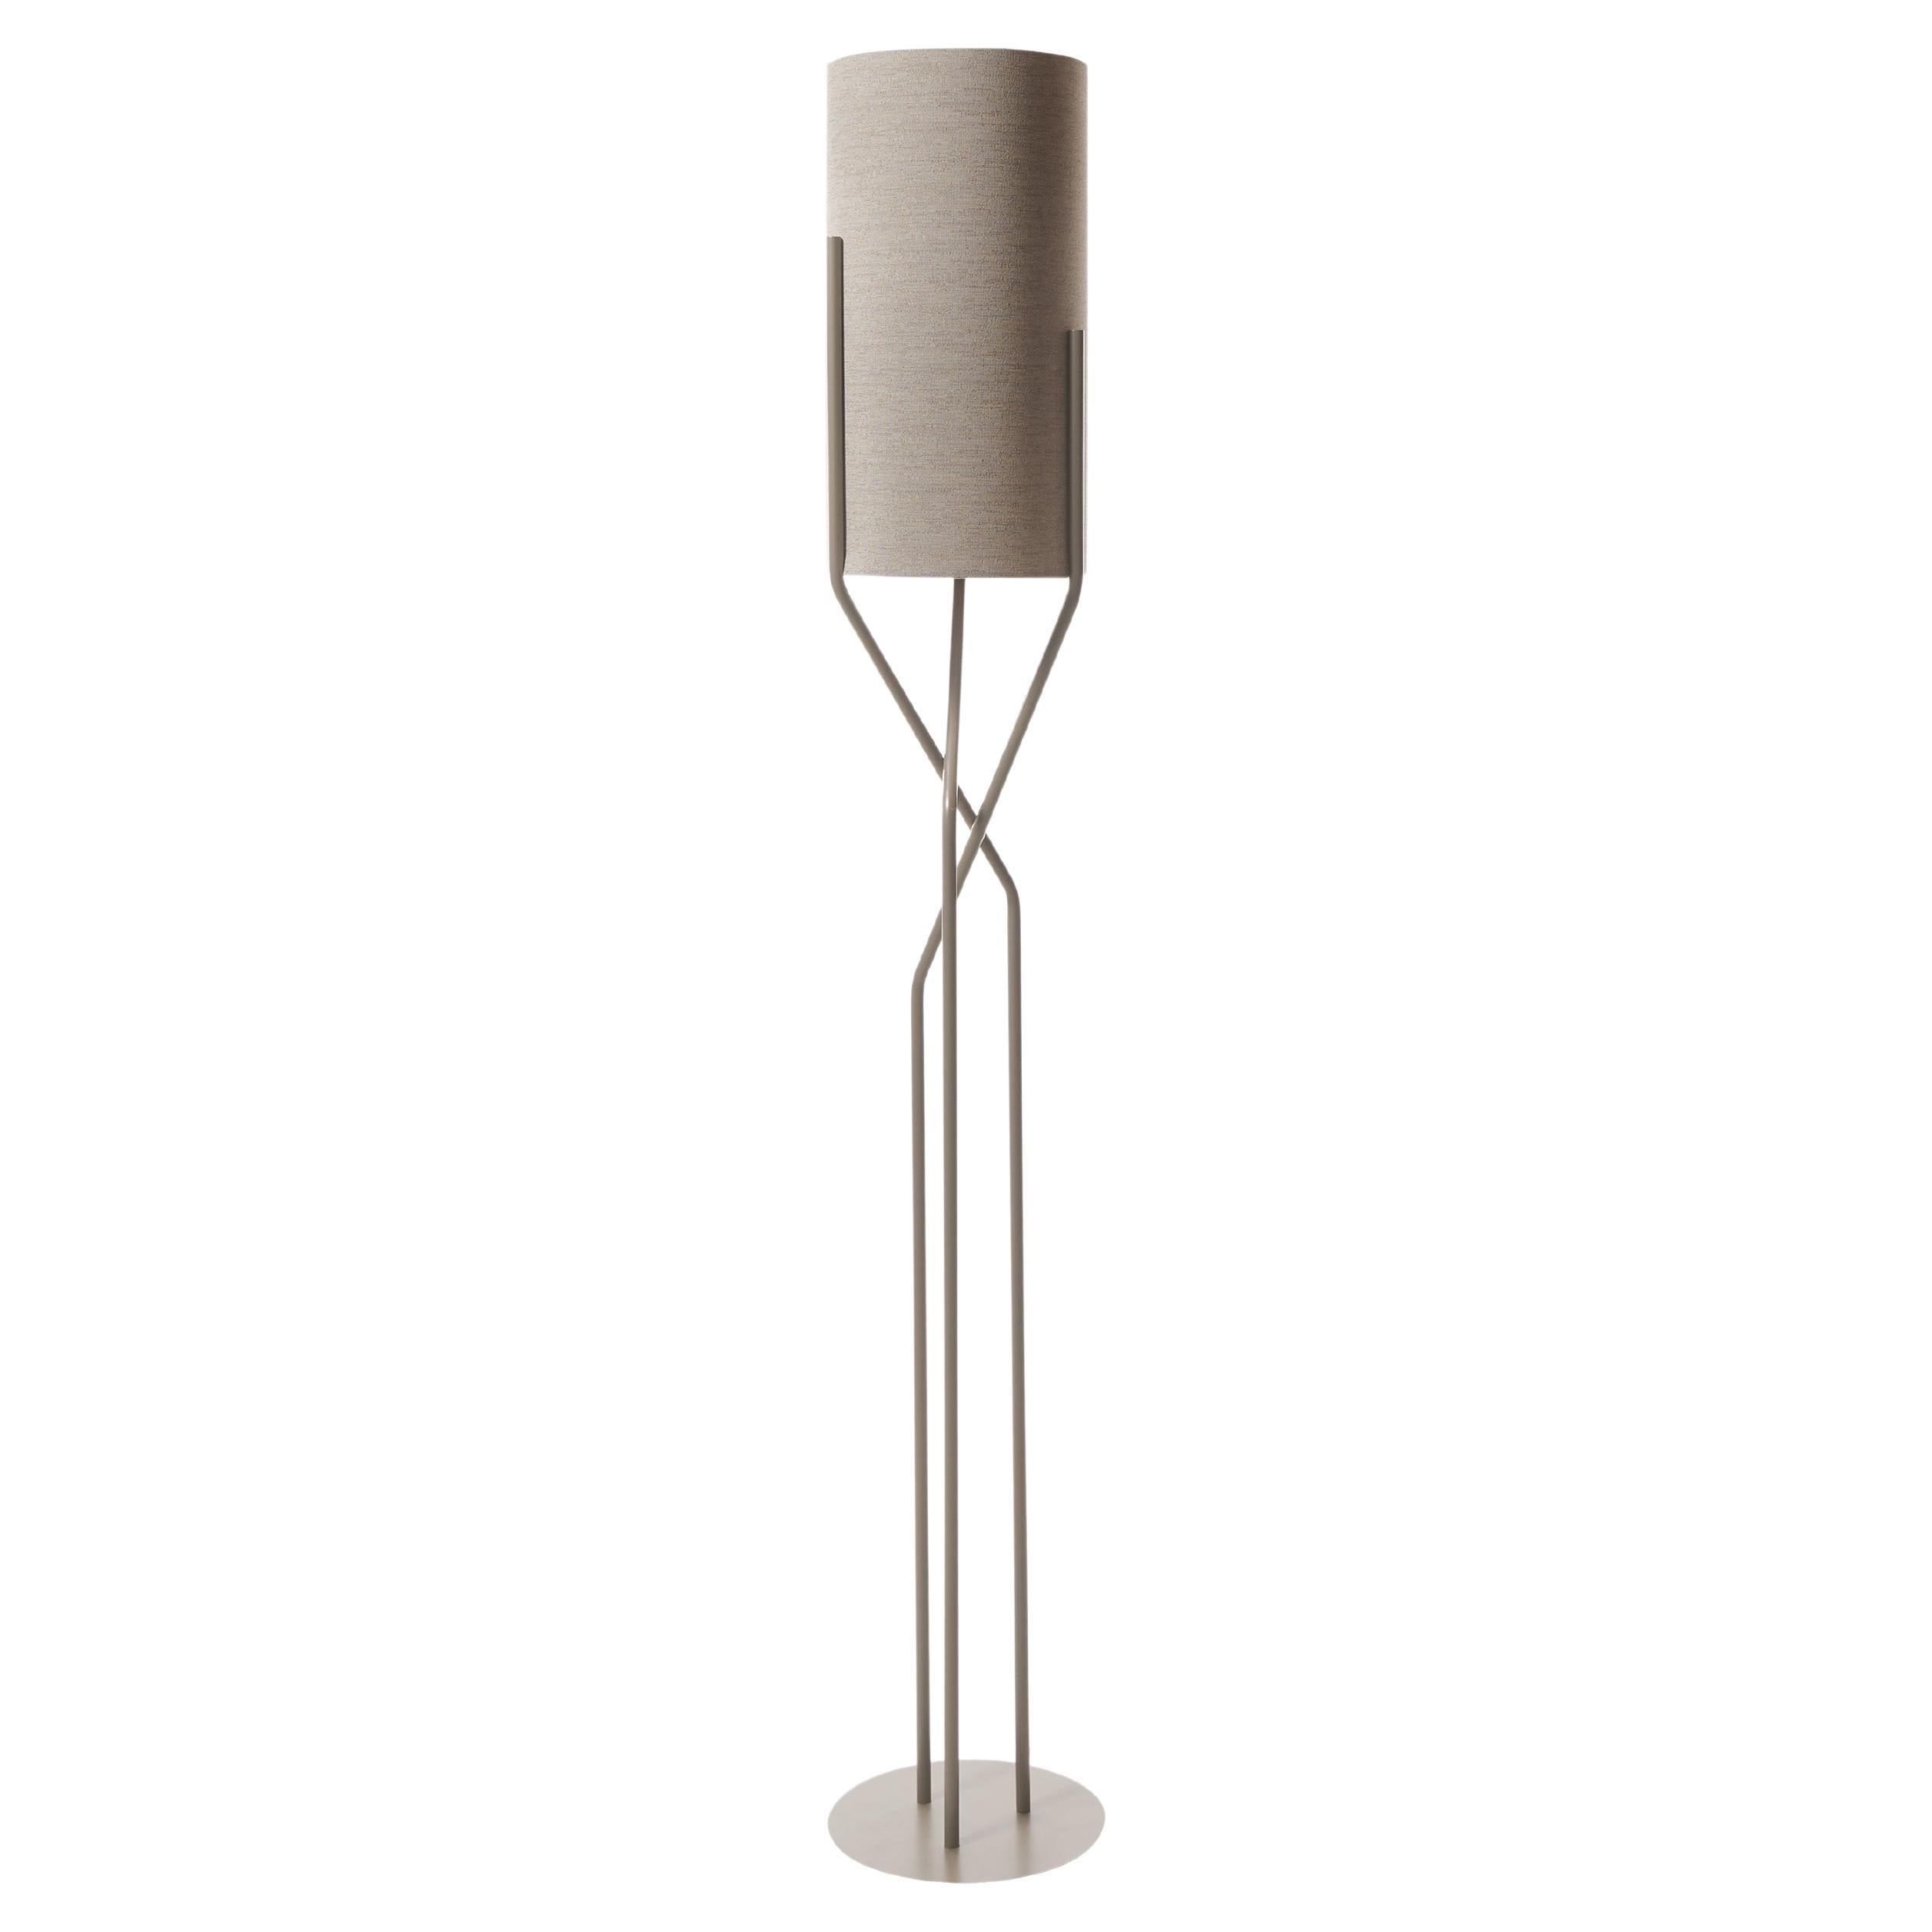 Slide Design Aura Floor Lamp in Melange Ecru Lampshade with Pearl Gray Stem For Sale